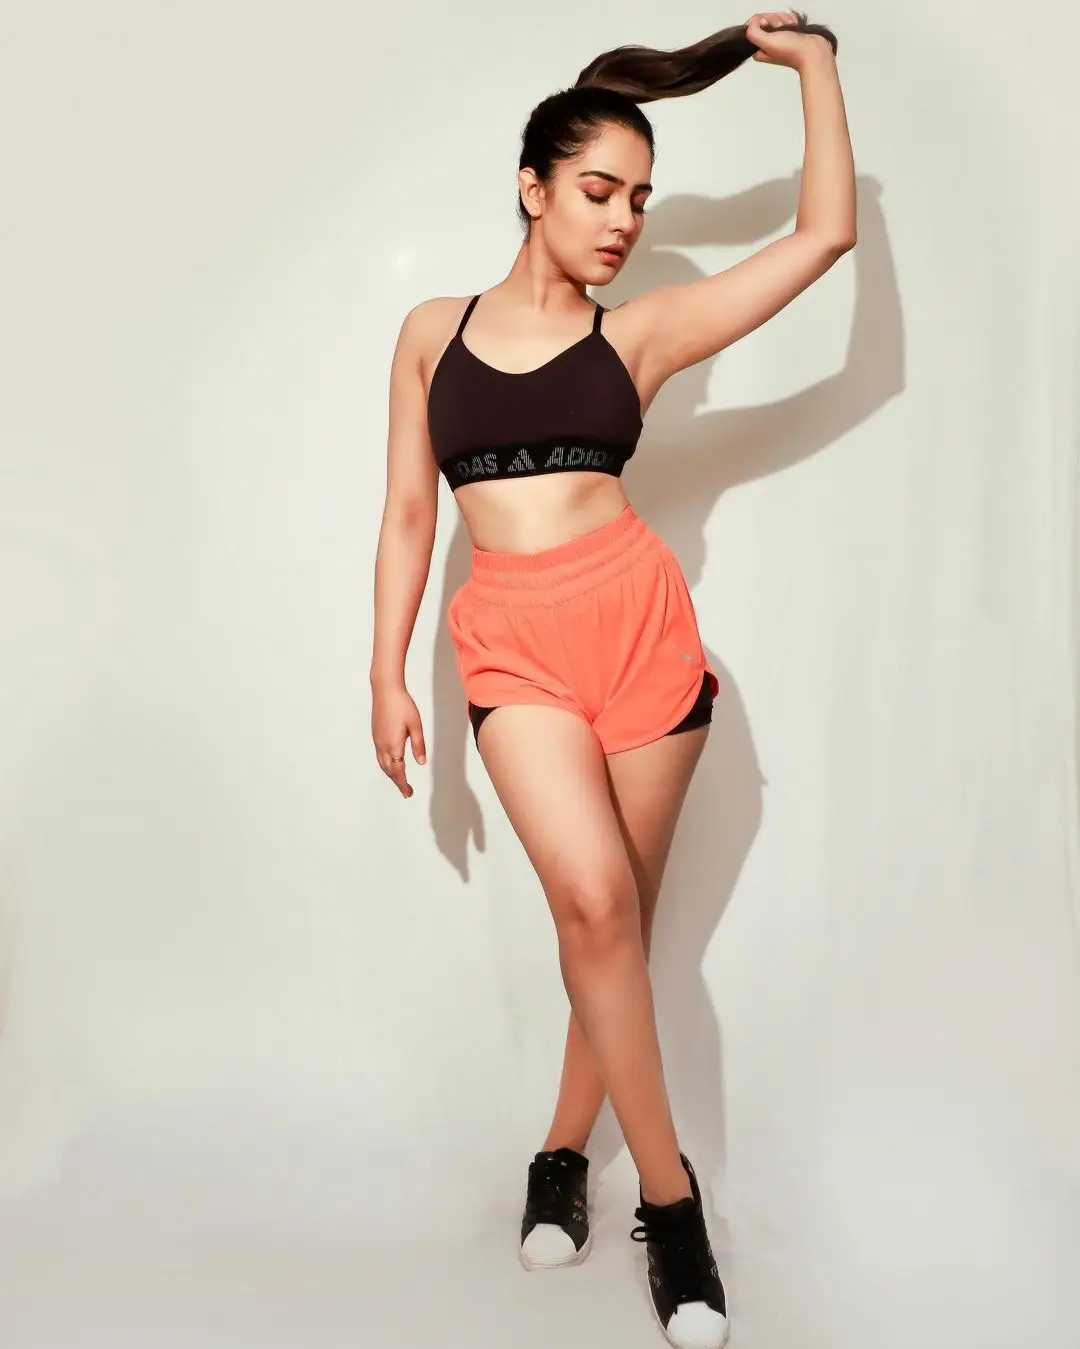 Malvi Malhotra Long Legs Show in Pink Mini Short